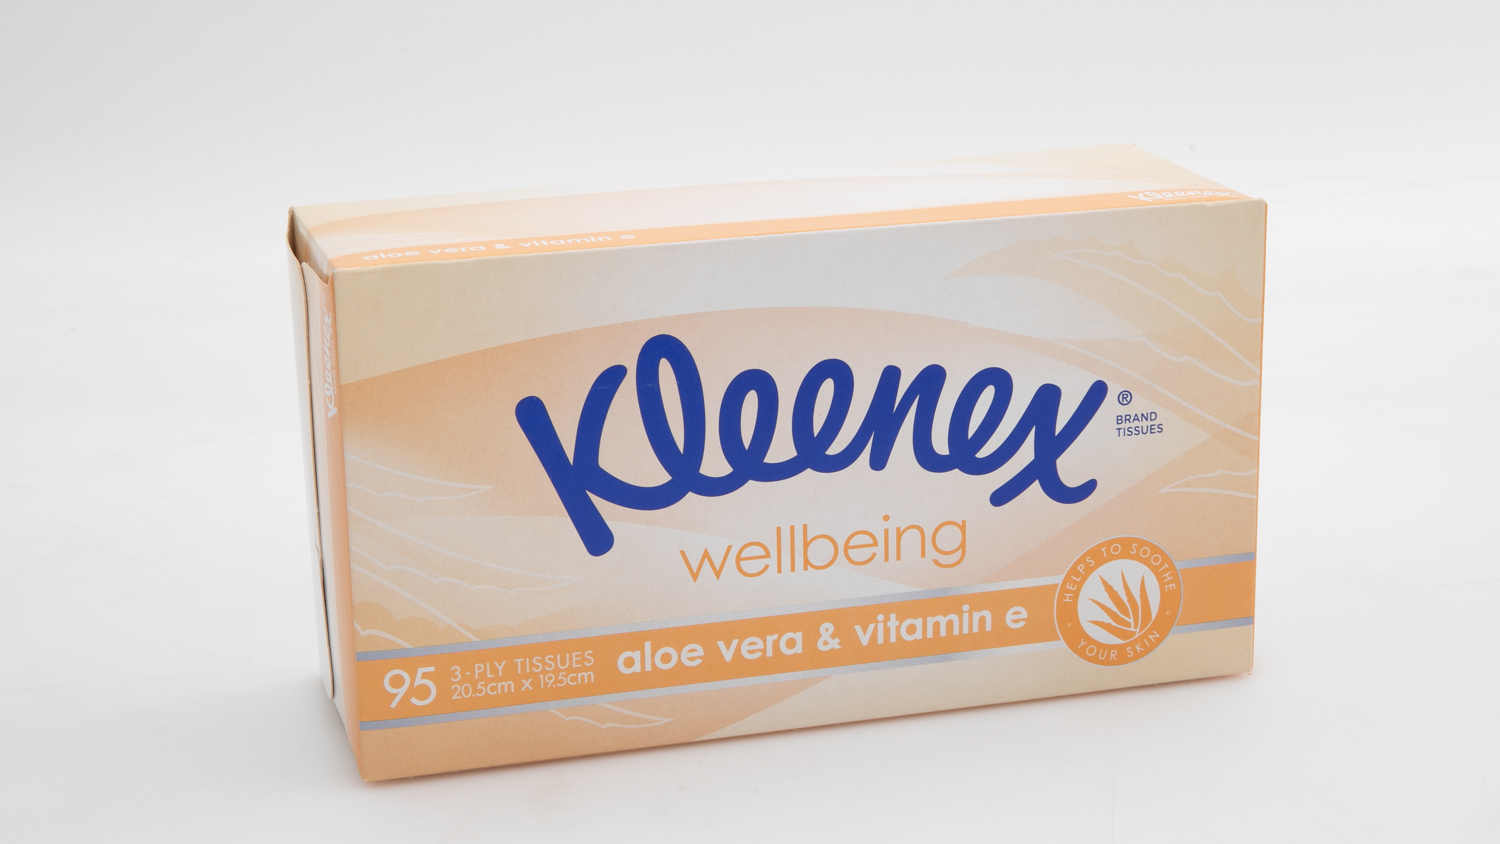 Kleenex Wellbeing Aloe Vera & Vitamin E 3-ply 95 tissues carousel image